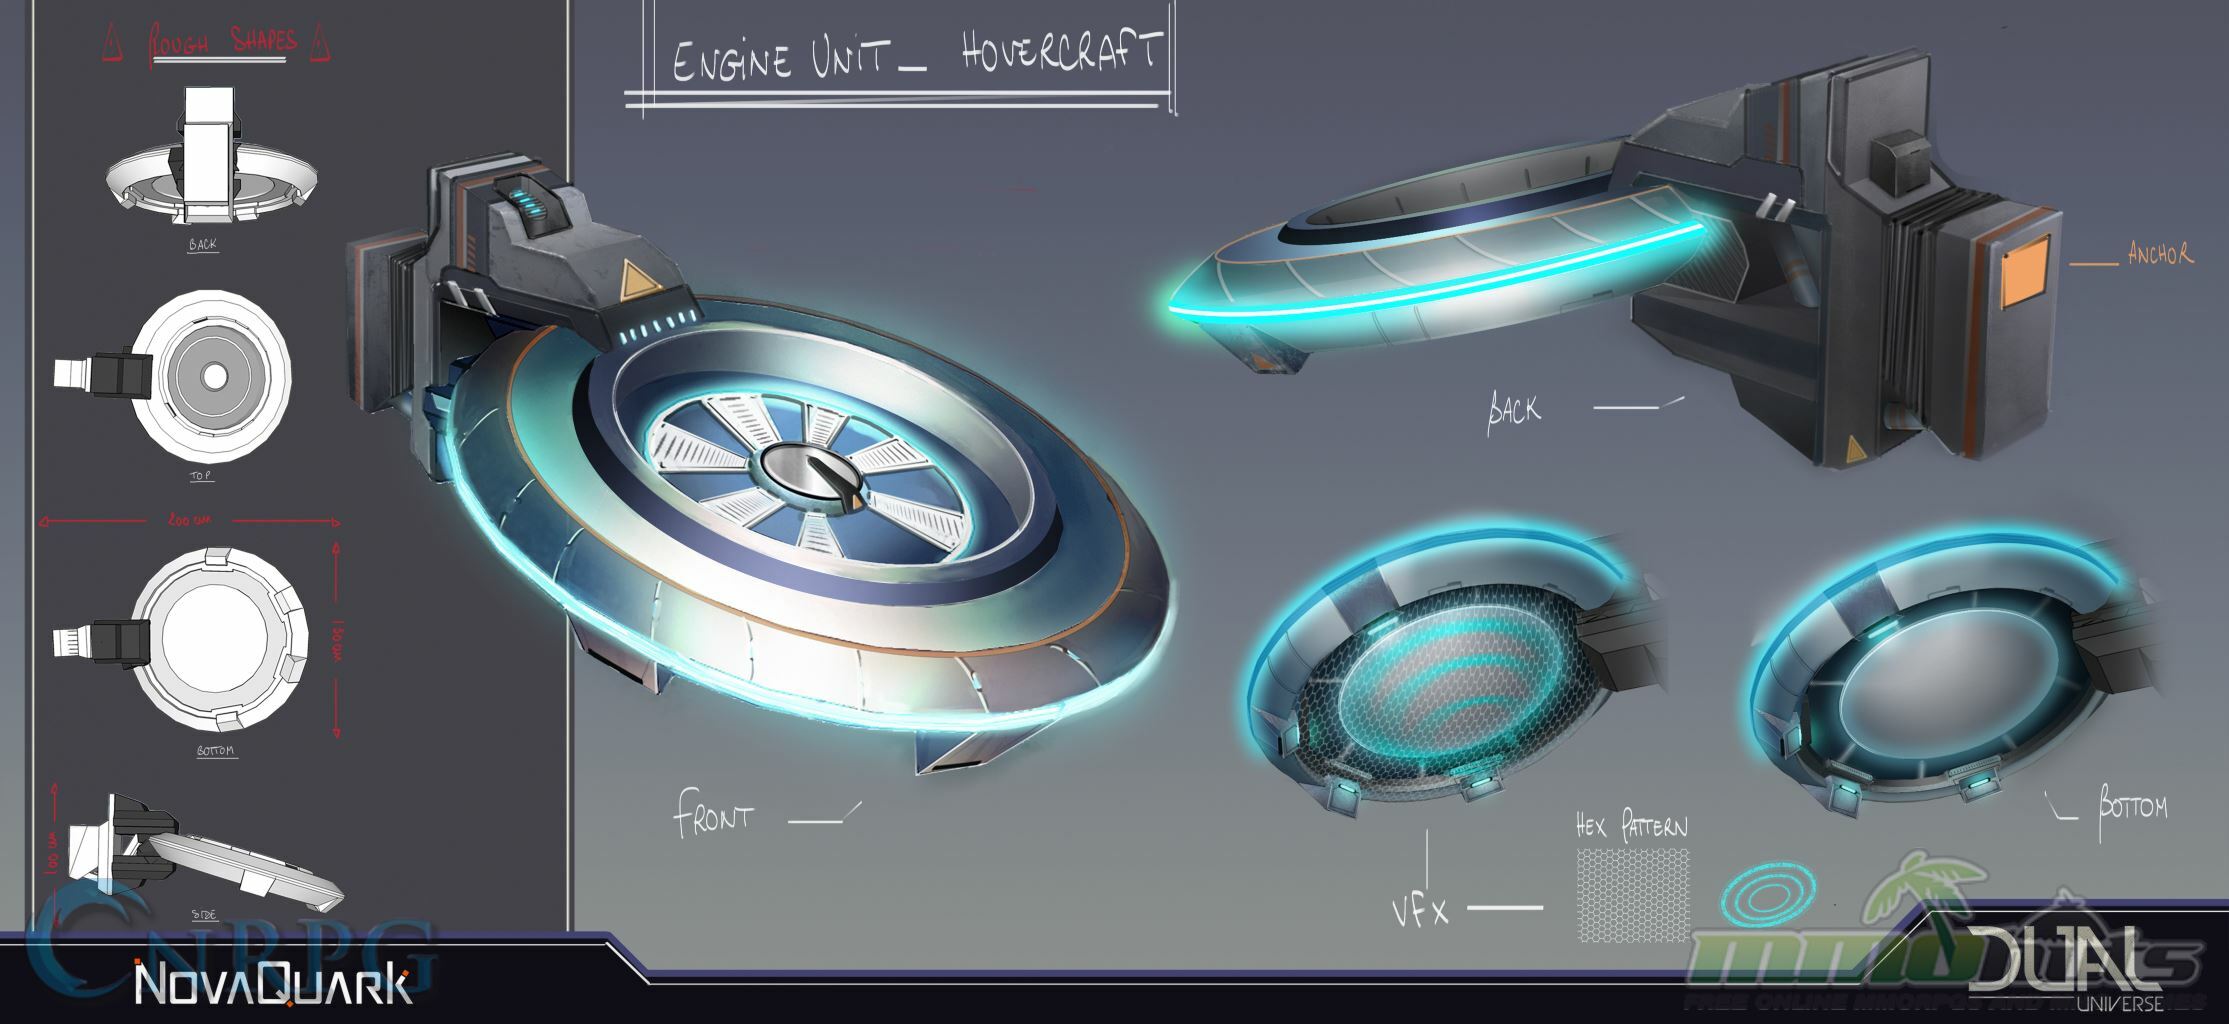 20_engineunit_hovercraft